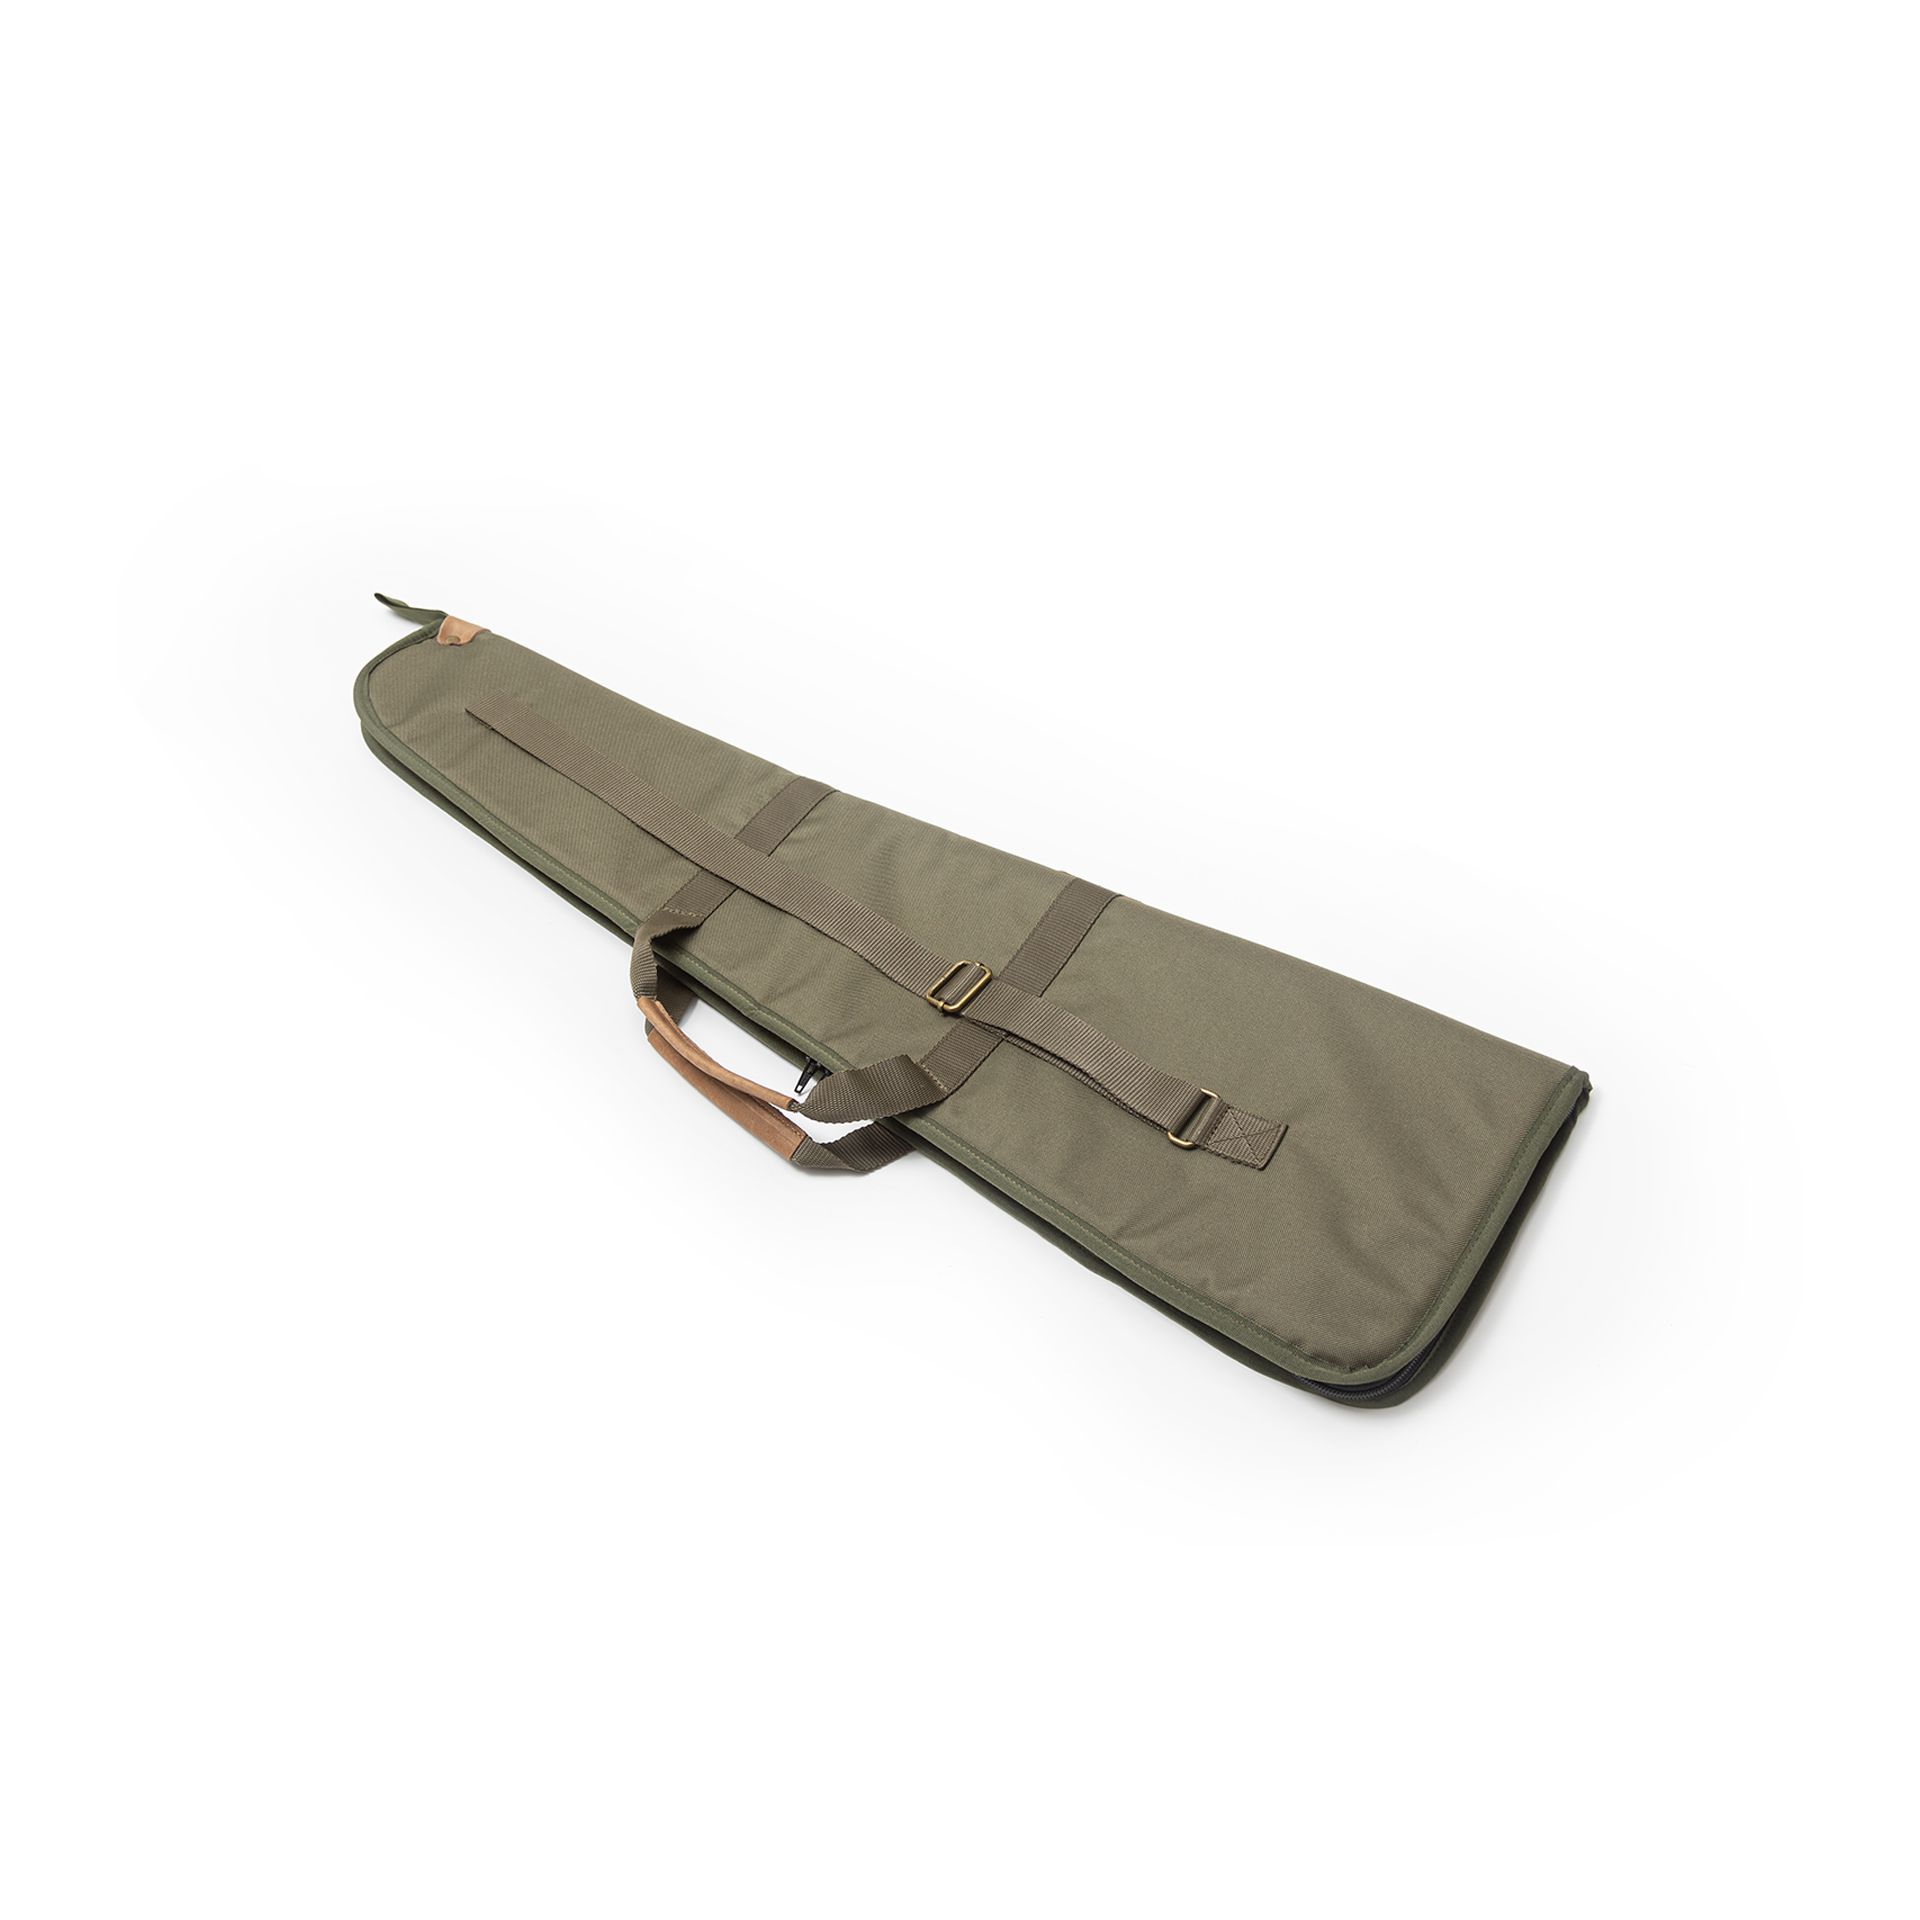 Dismountable rifle cover in nylon  – 32456-02M